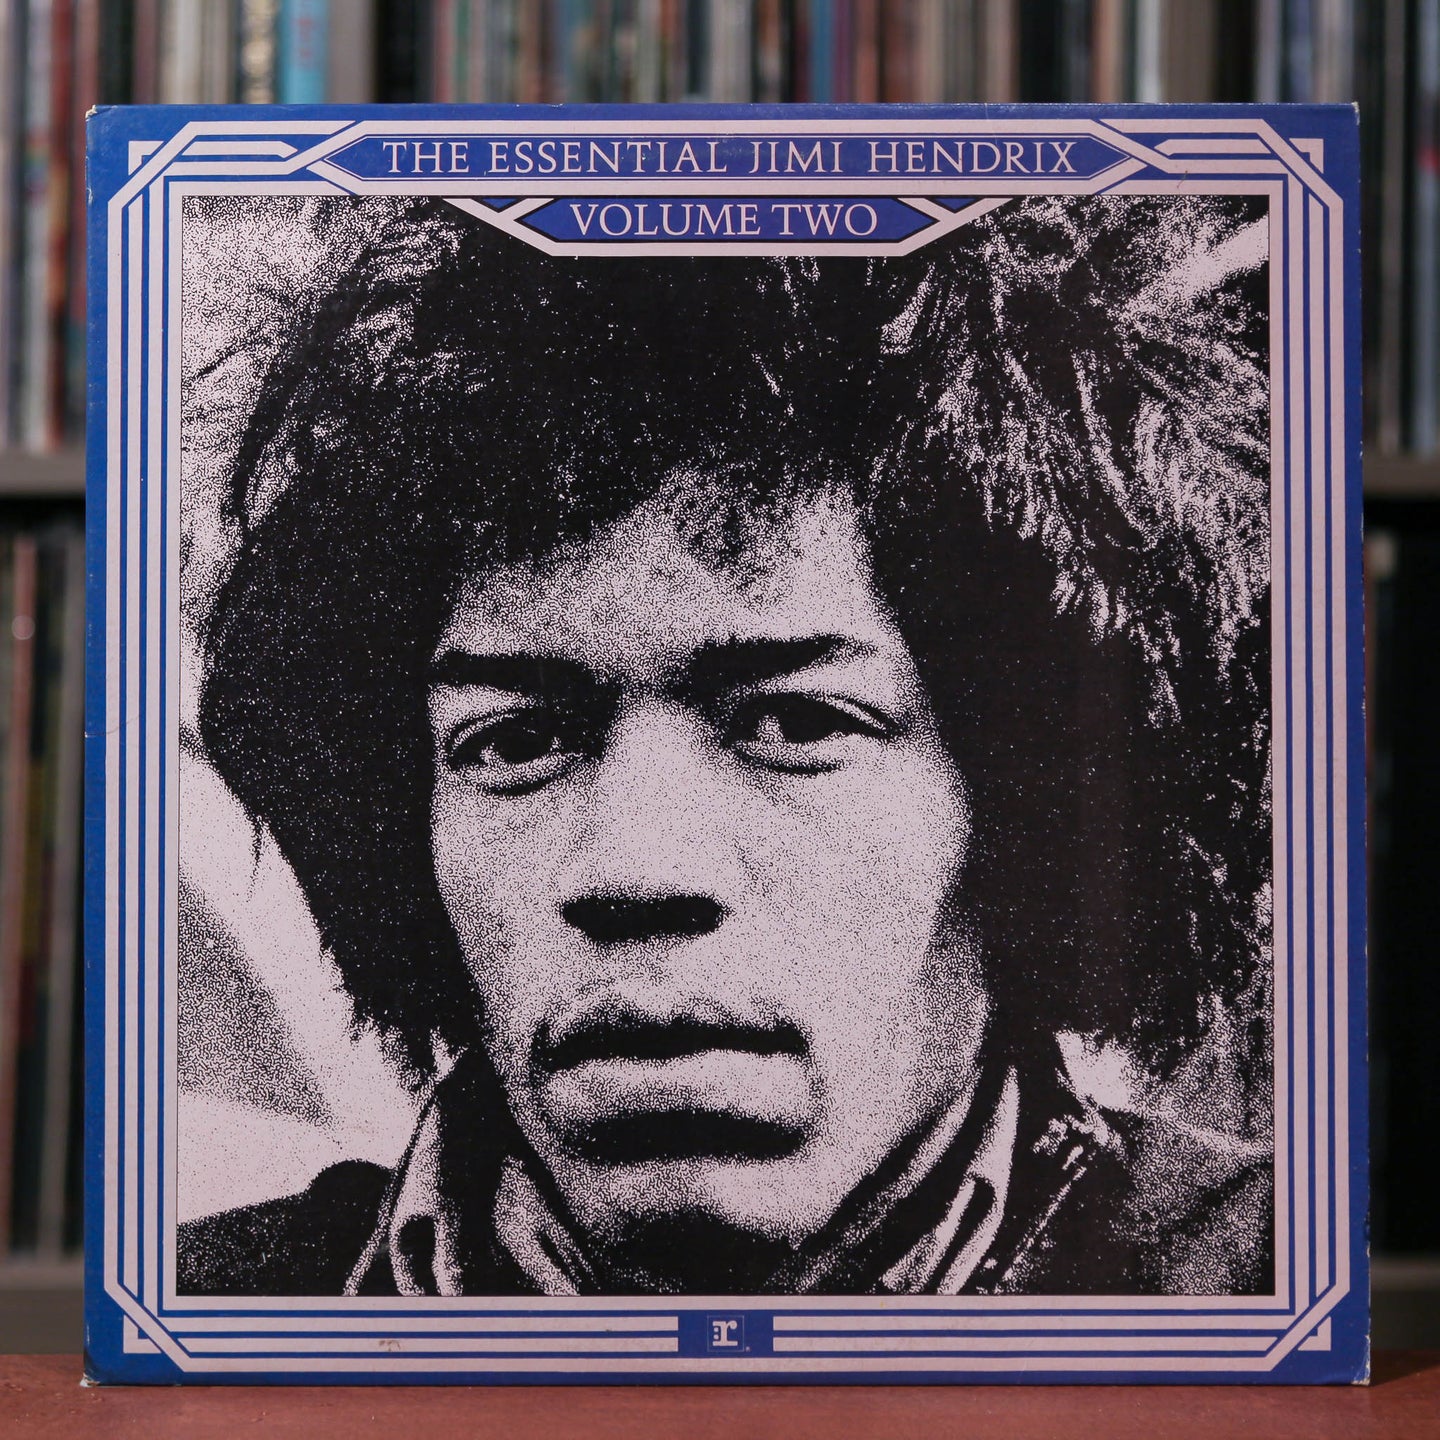 Jimi Hendrix - The Essential Jimi Hendrix (Volume Two) - 1979 Reprise, VG+/VG+